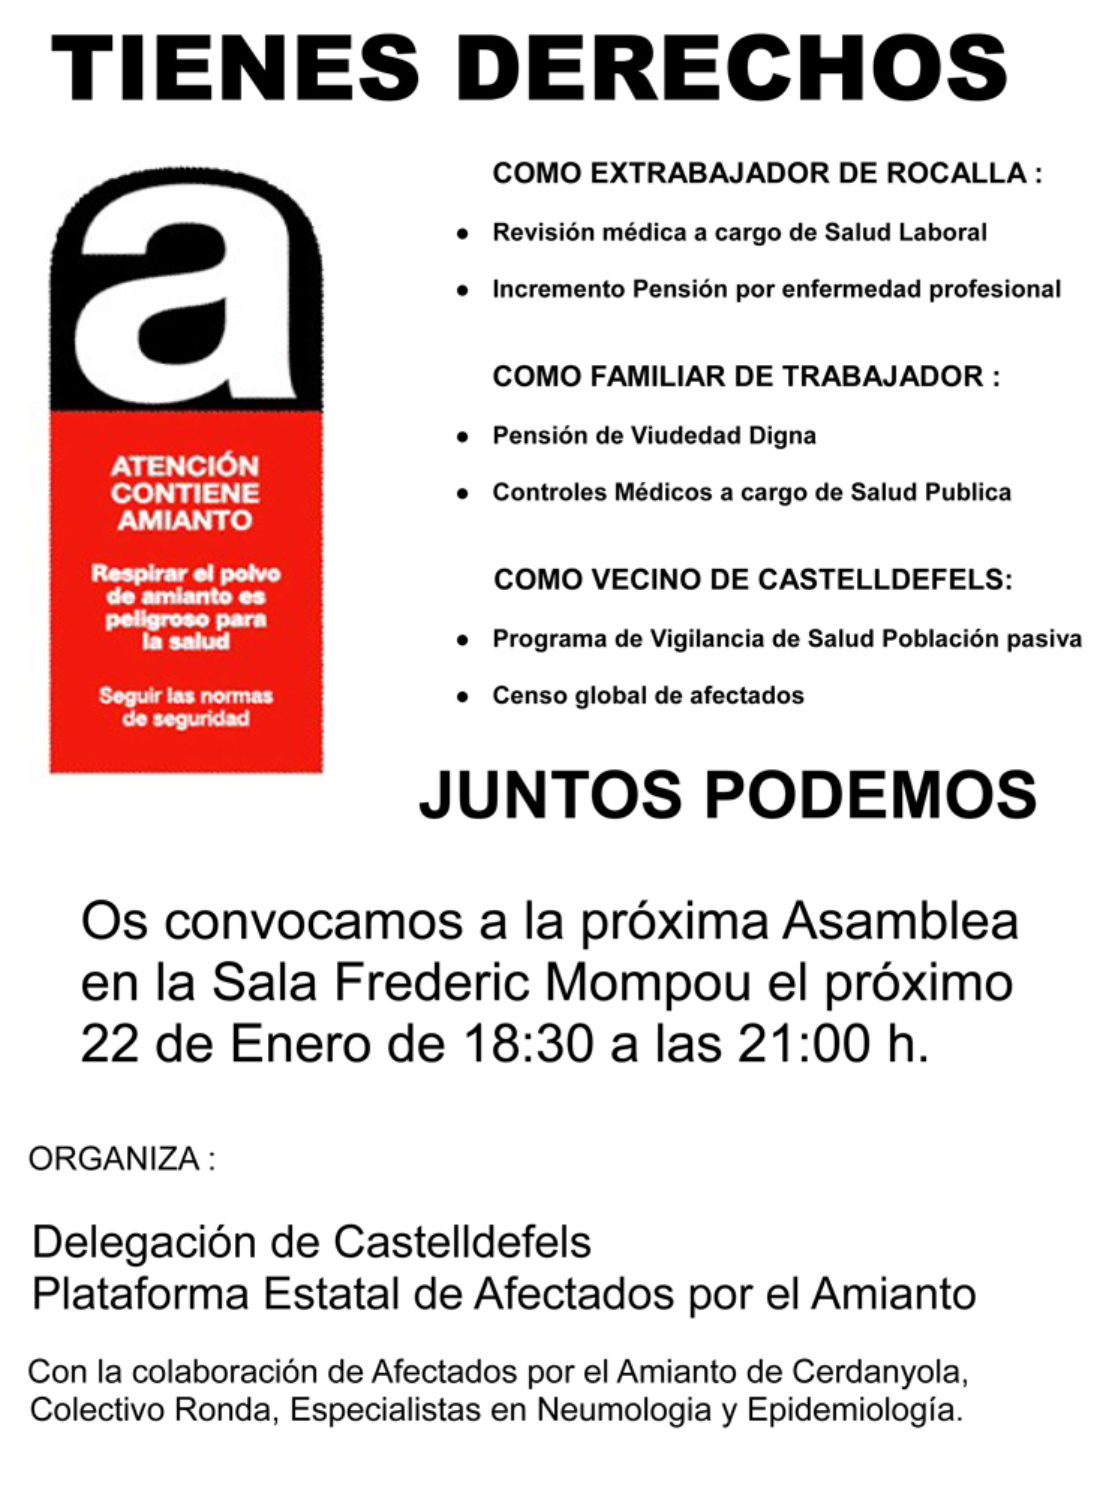 Castelldefels : asamblea de afectados por el amianto